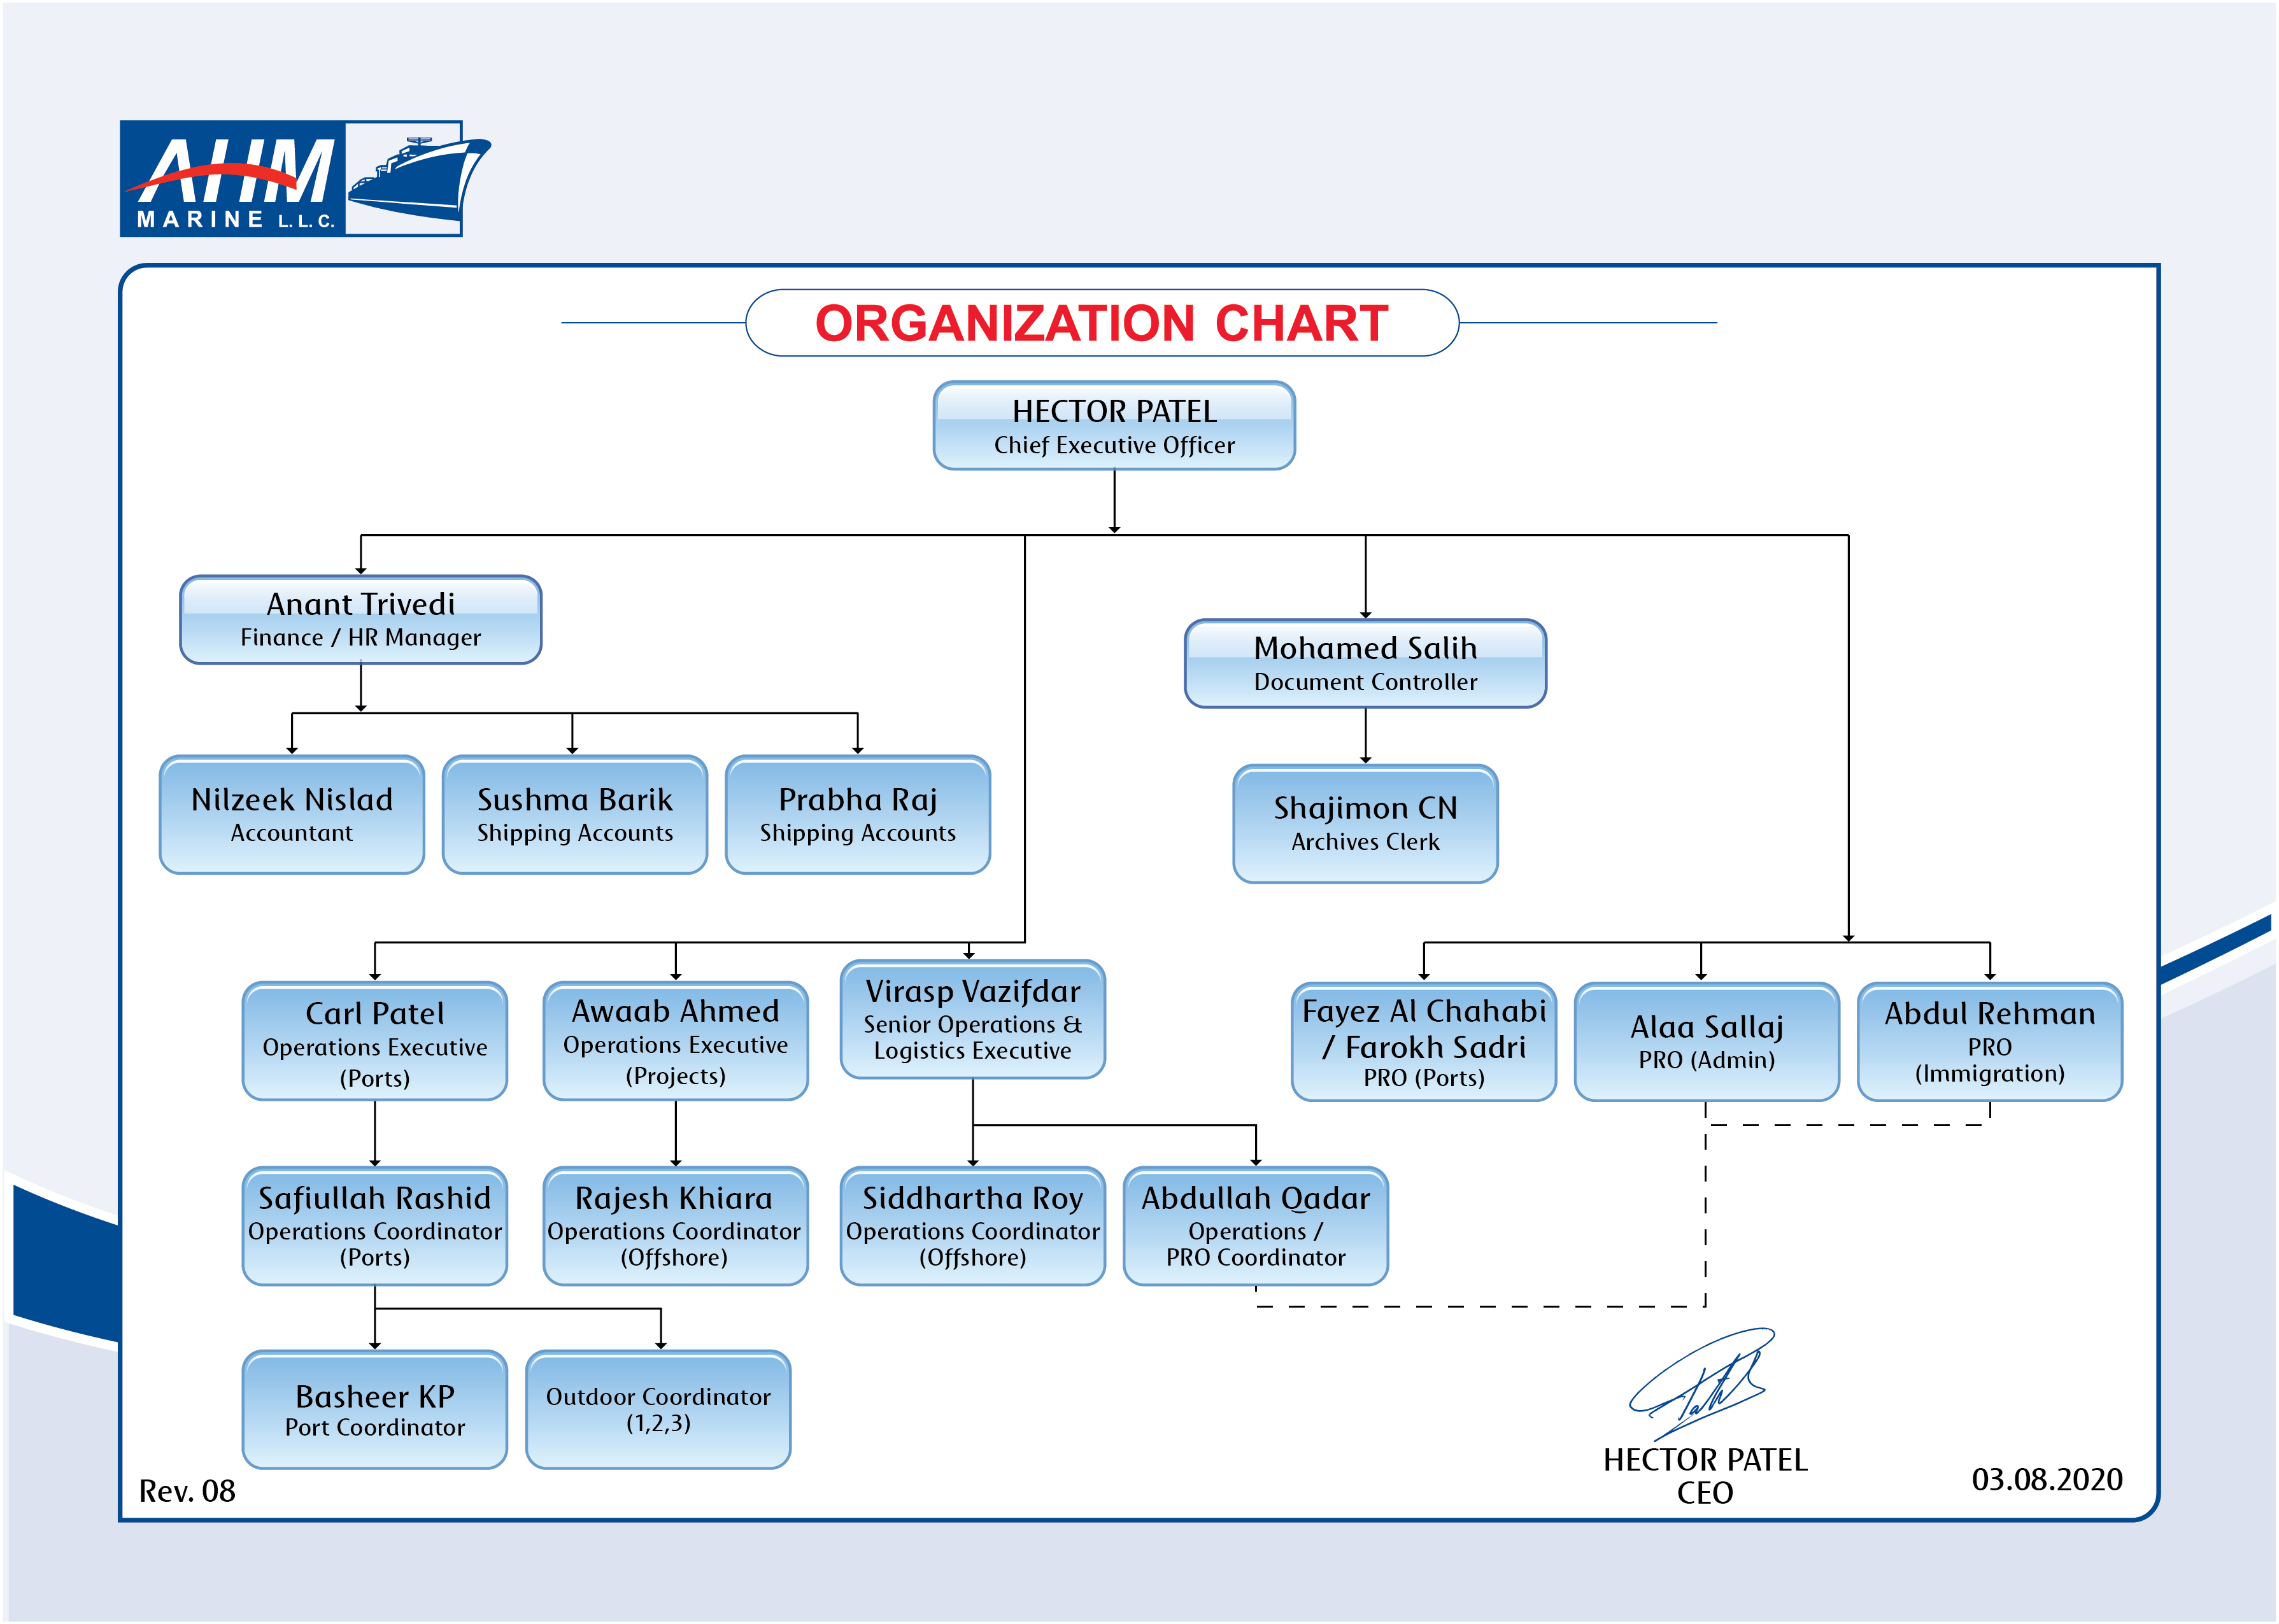 Finance Organizational Chart